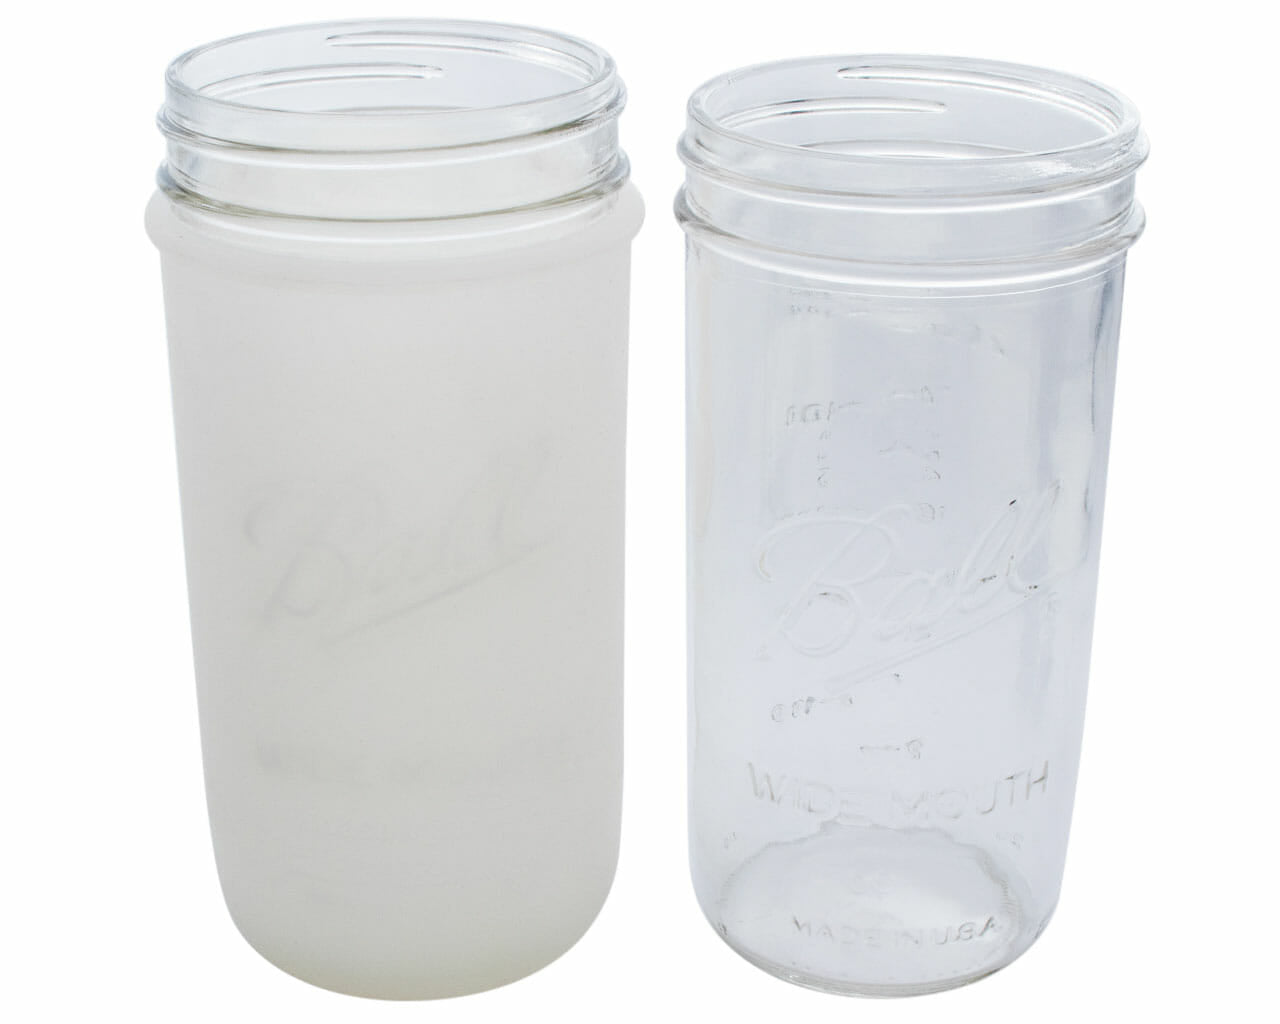 Jarjackets Mason Jar Silicone Sleeves - 24oz (1.5 pint) Jars (4-Pack)